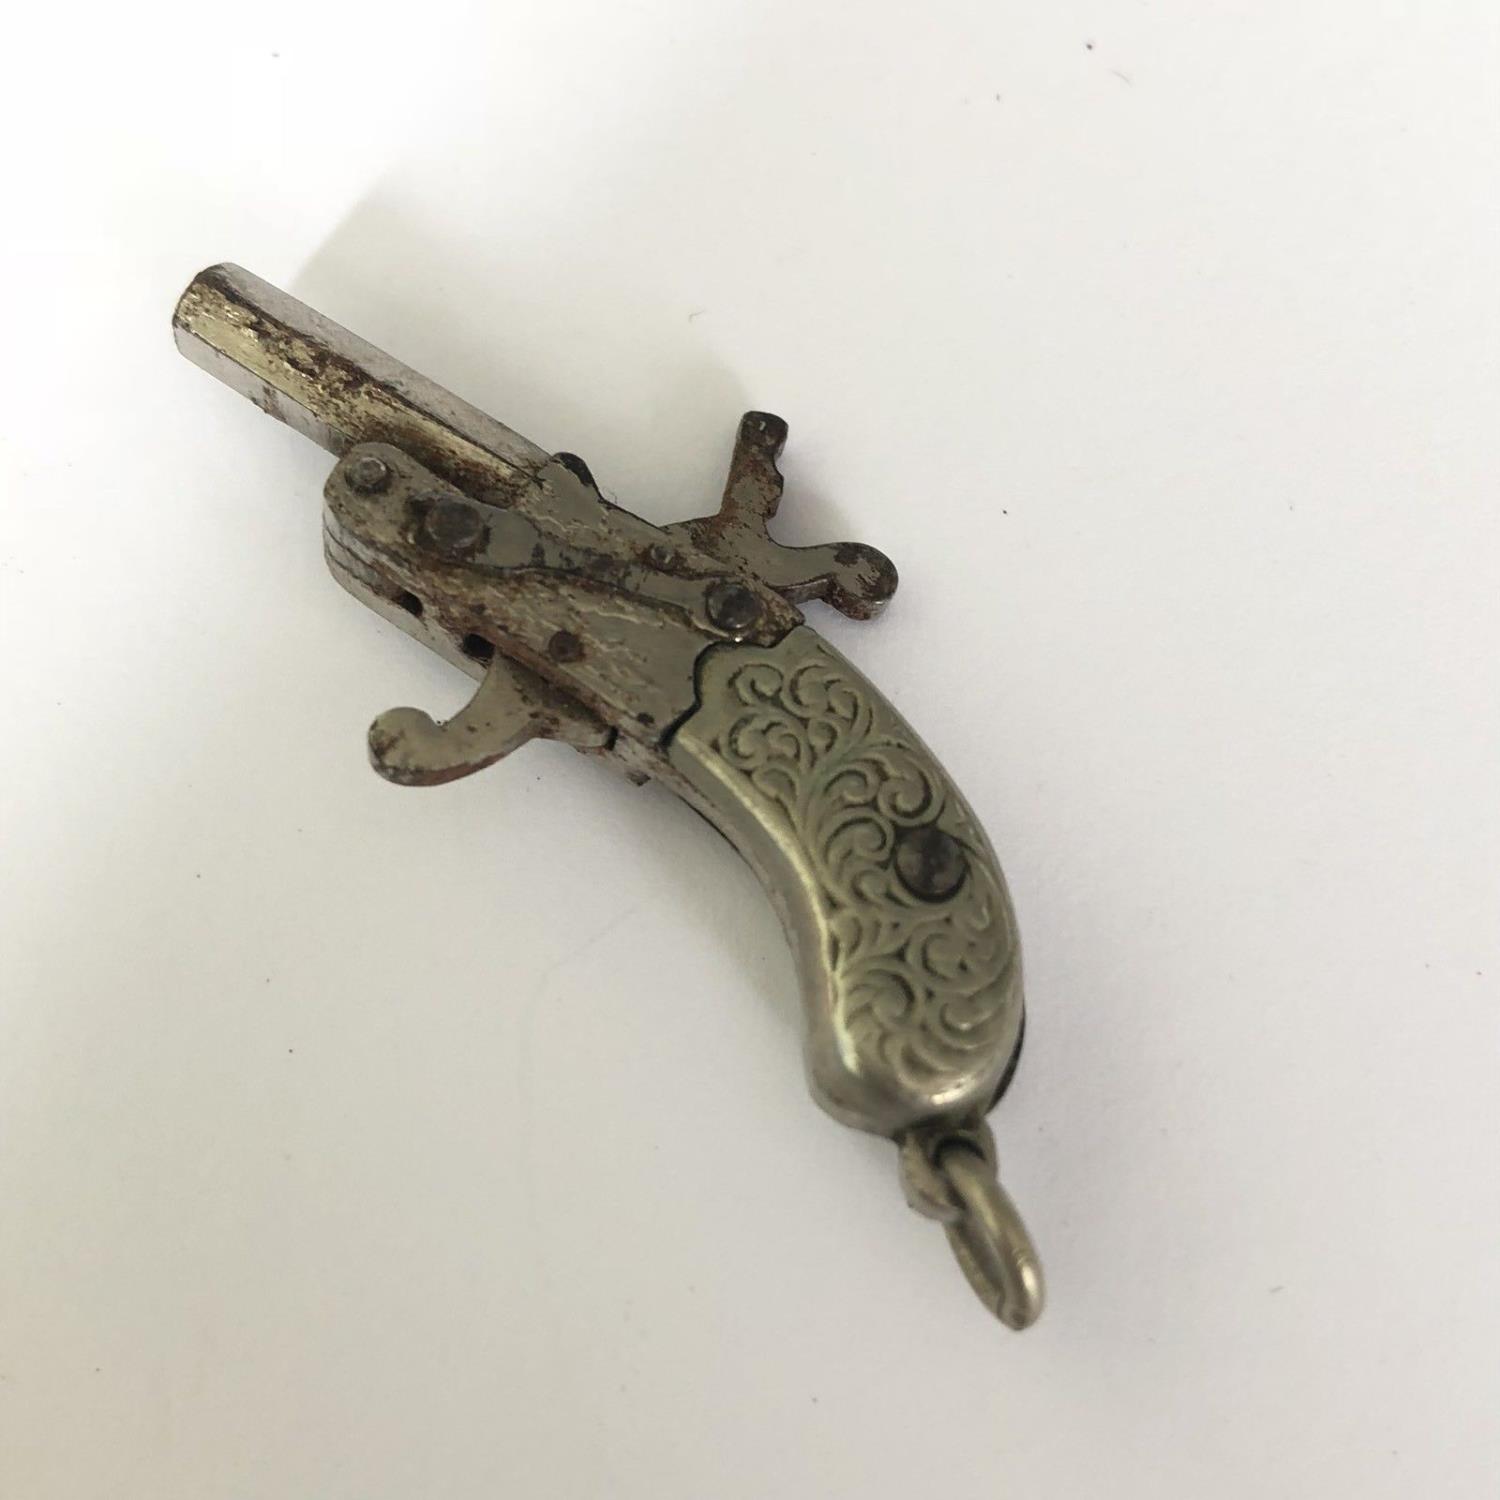 A Miniature Antique Tiny Spy Pistol - Berloque 2mm Pin Fire Gun with Scroll Grip - Image 2 of 3